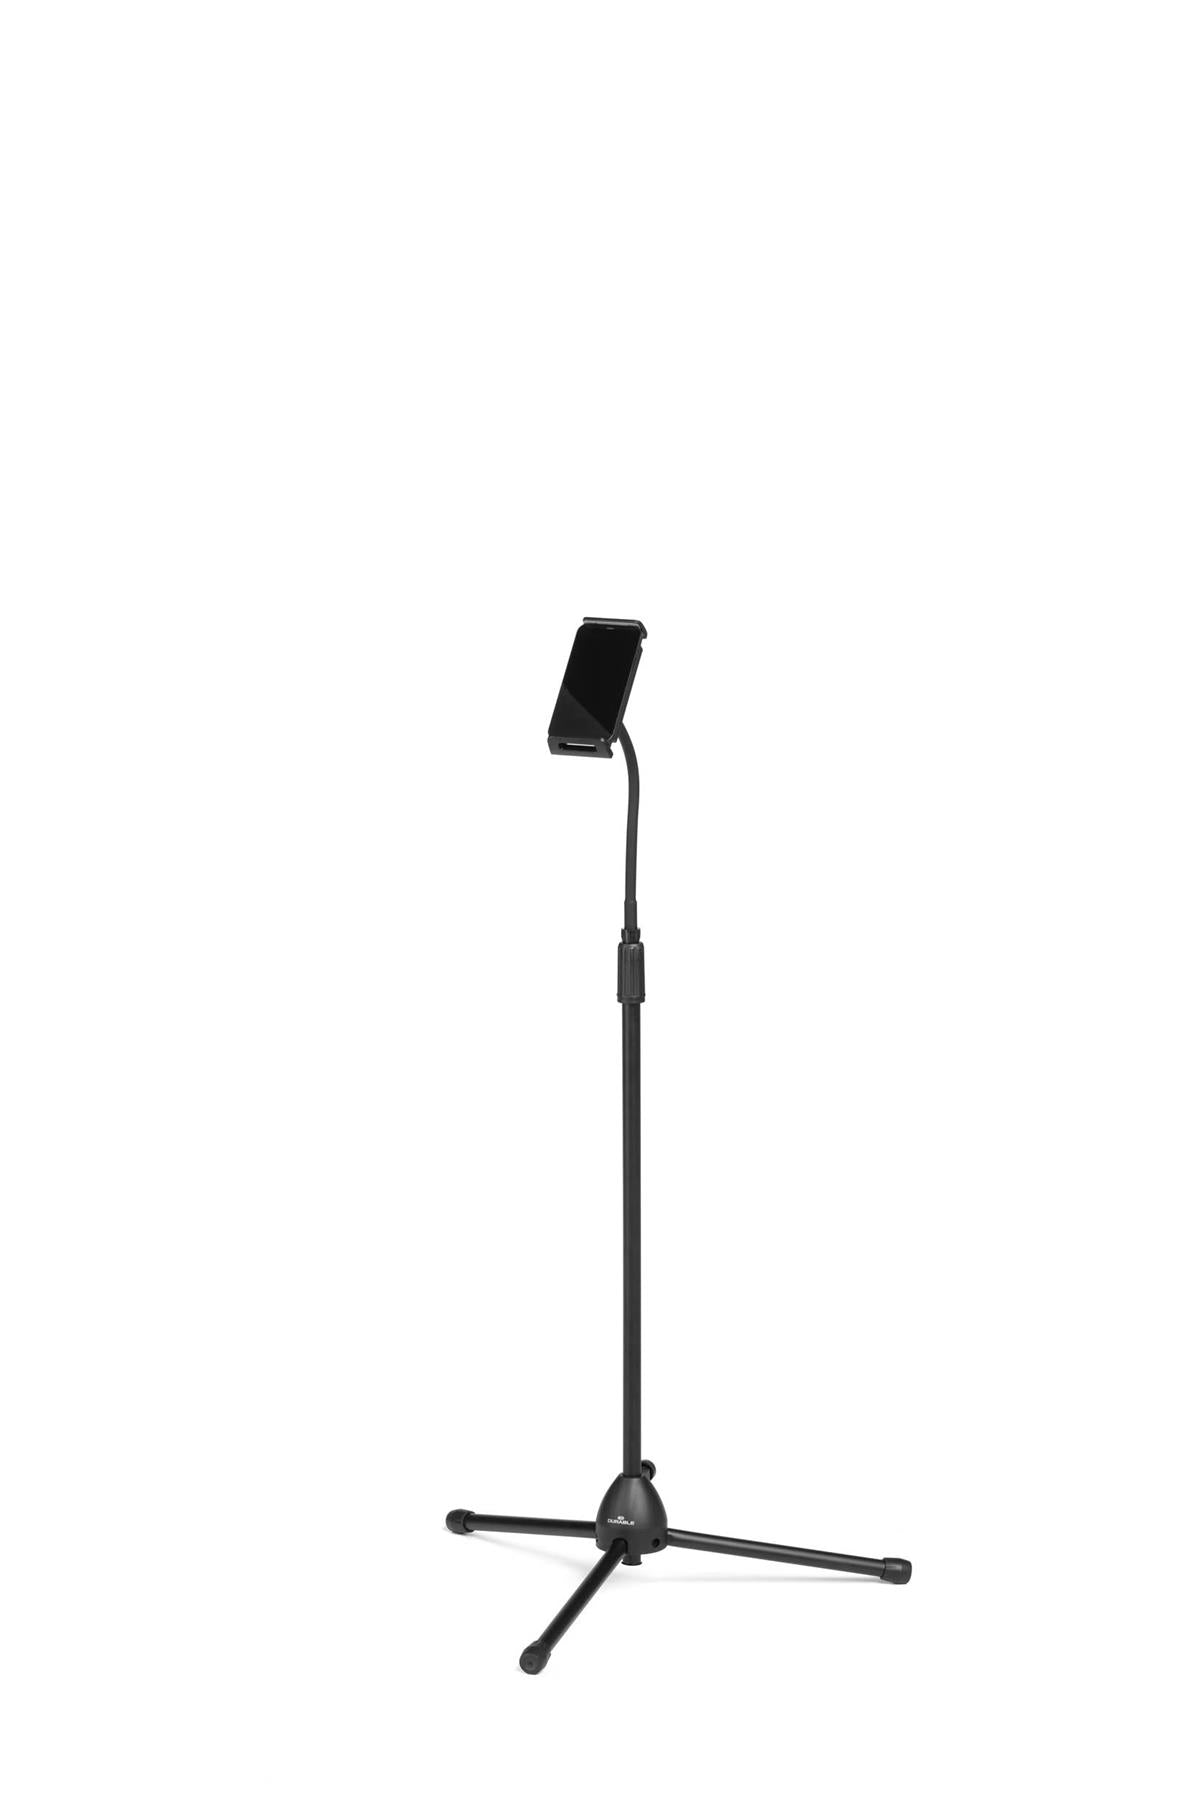 Durable TWIST 360 Gooseneck Tablet and Phone Holder iPad Tripod Stand | Black